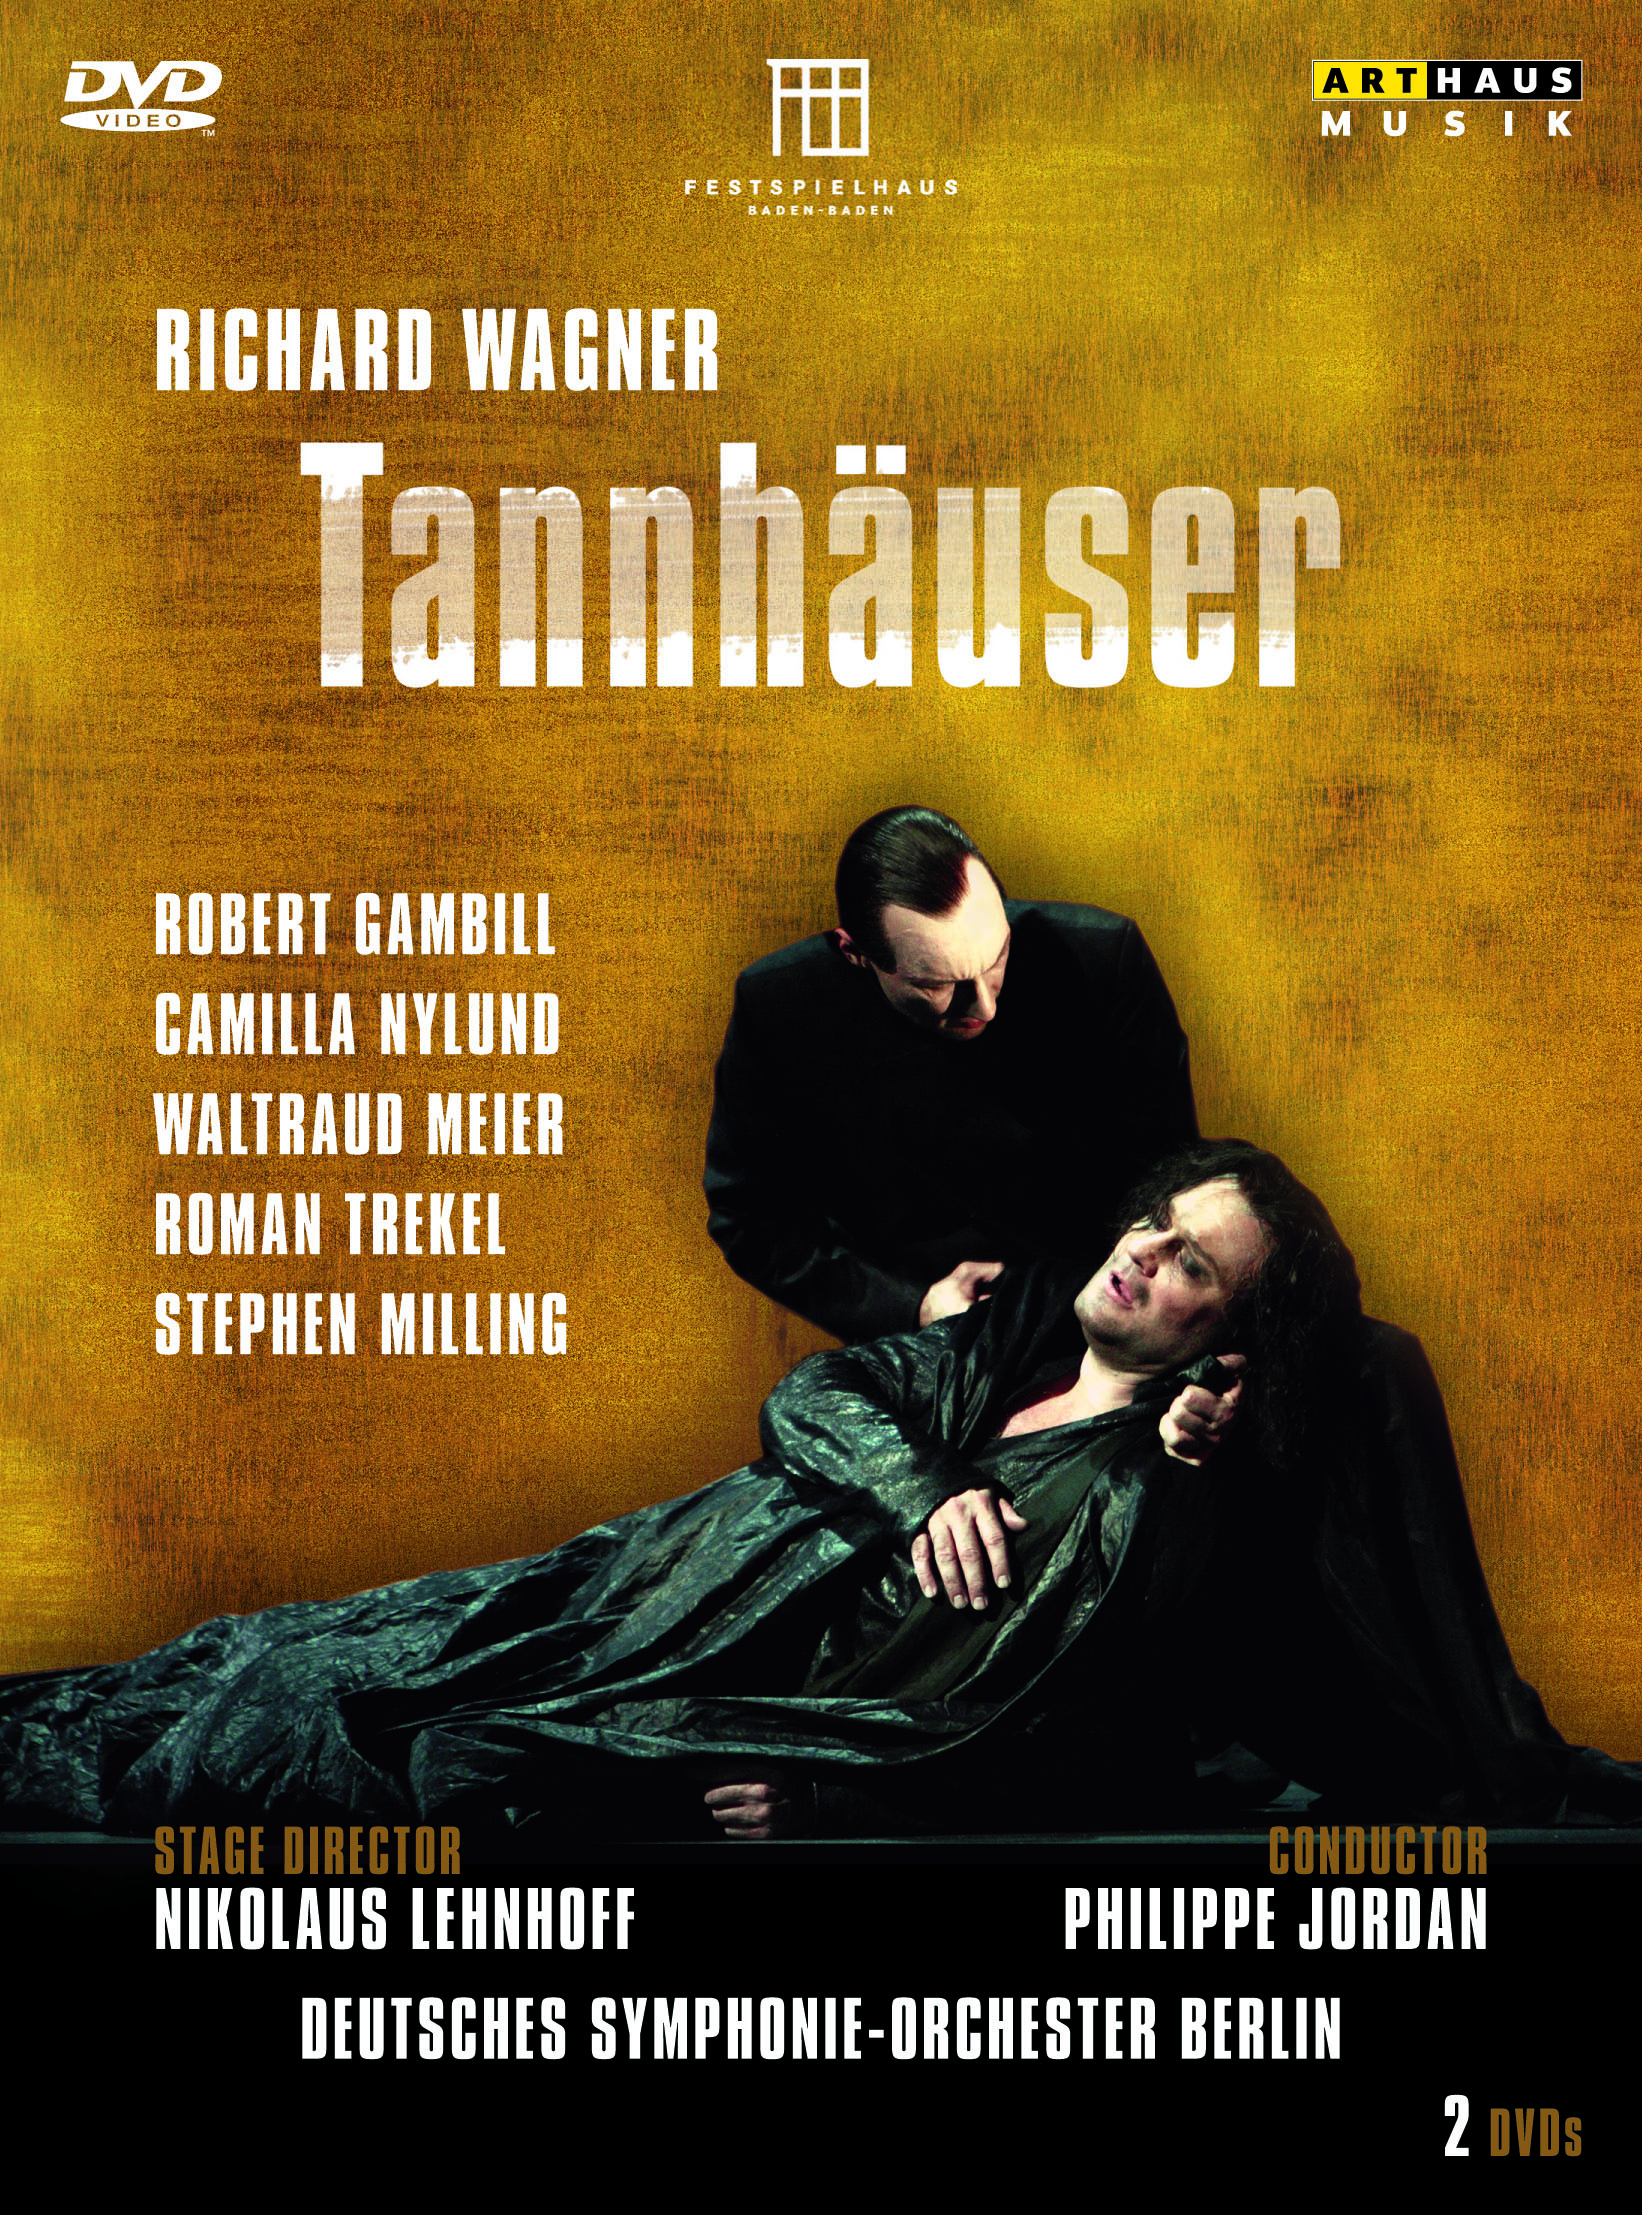 Richard Wagner Tannhäuser Opera Dvd Arthaus Musik 